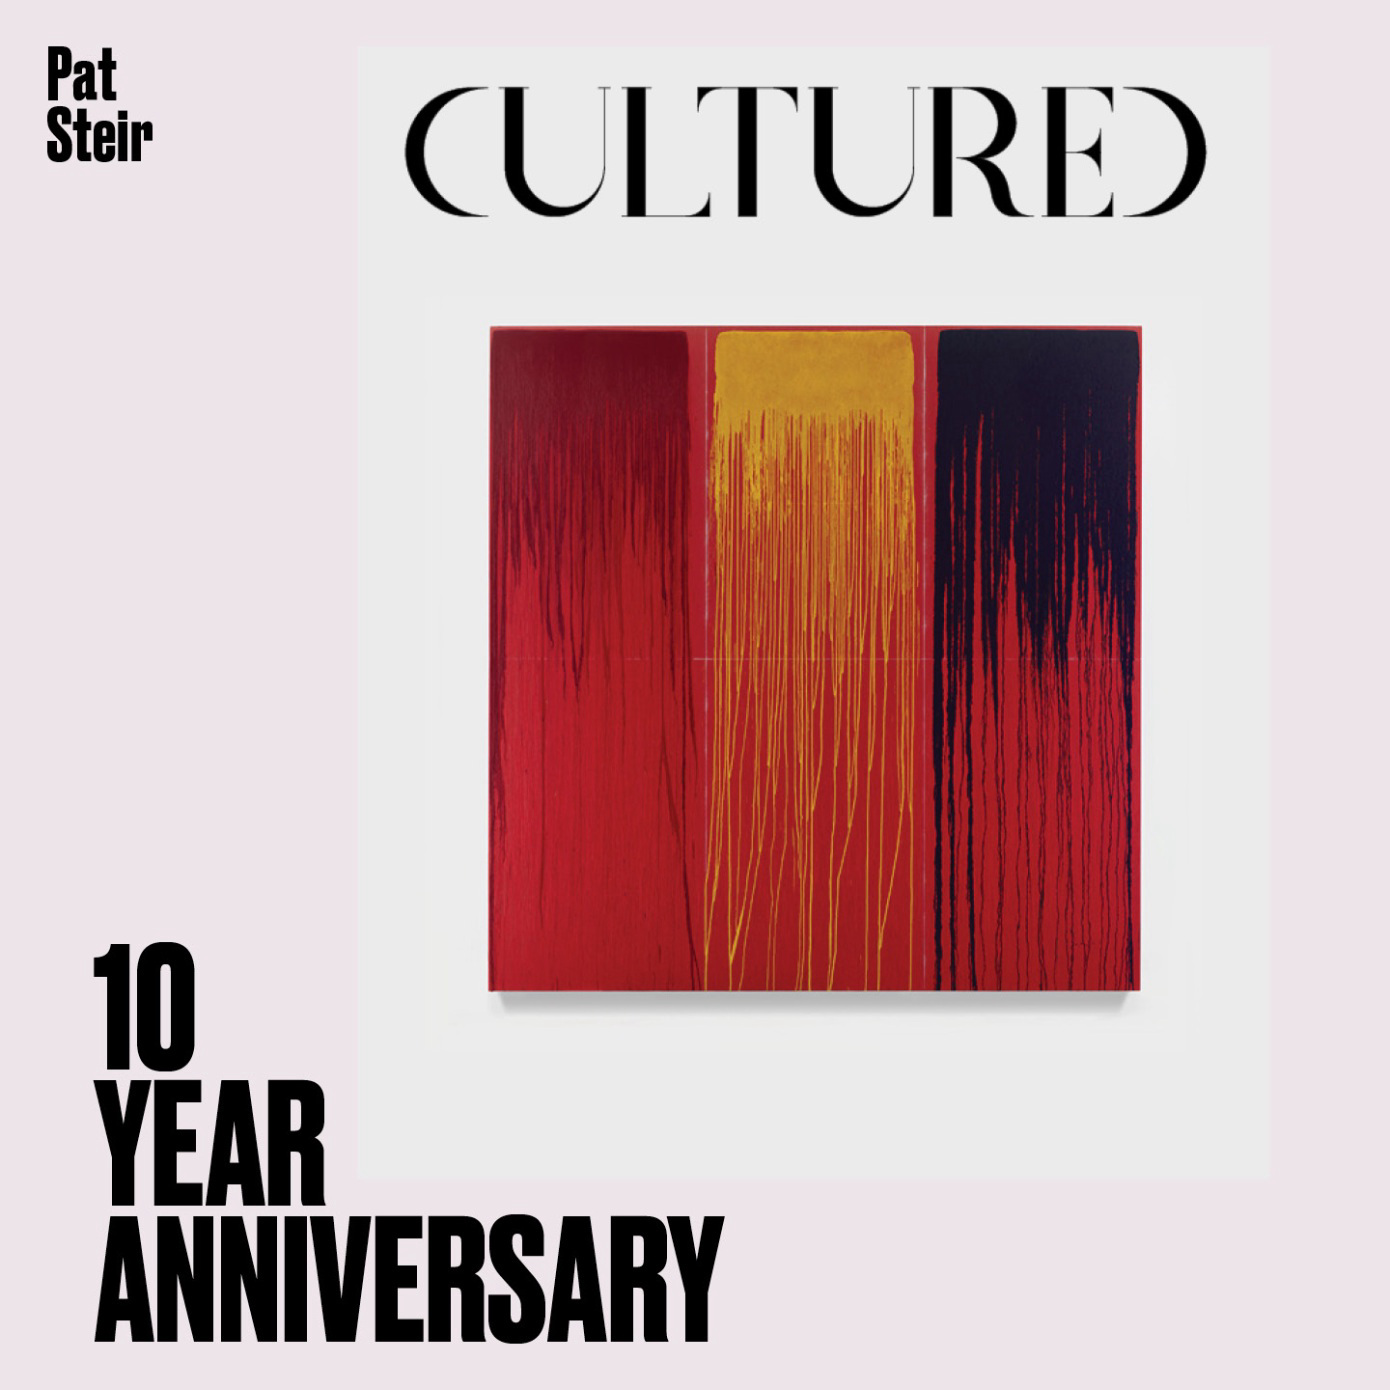 Pat Steir Previews New Work in Special Cover for <em>Cultured</em>